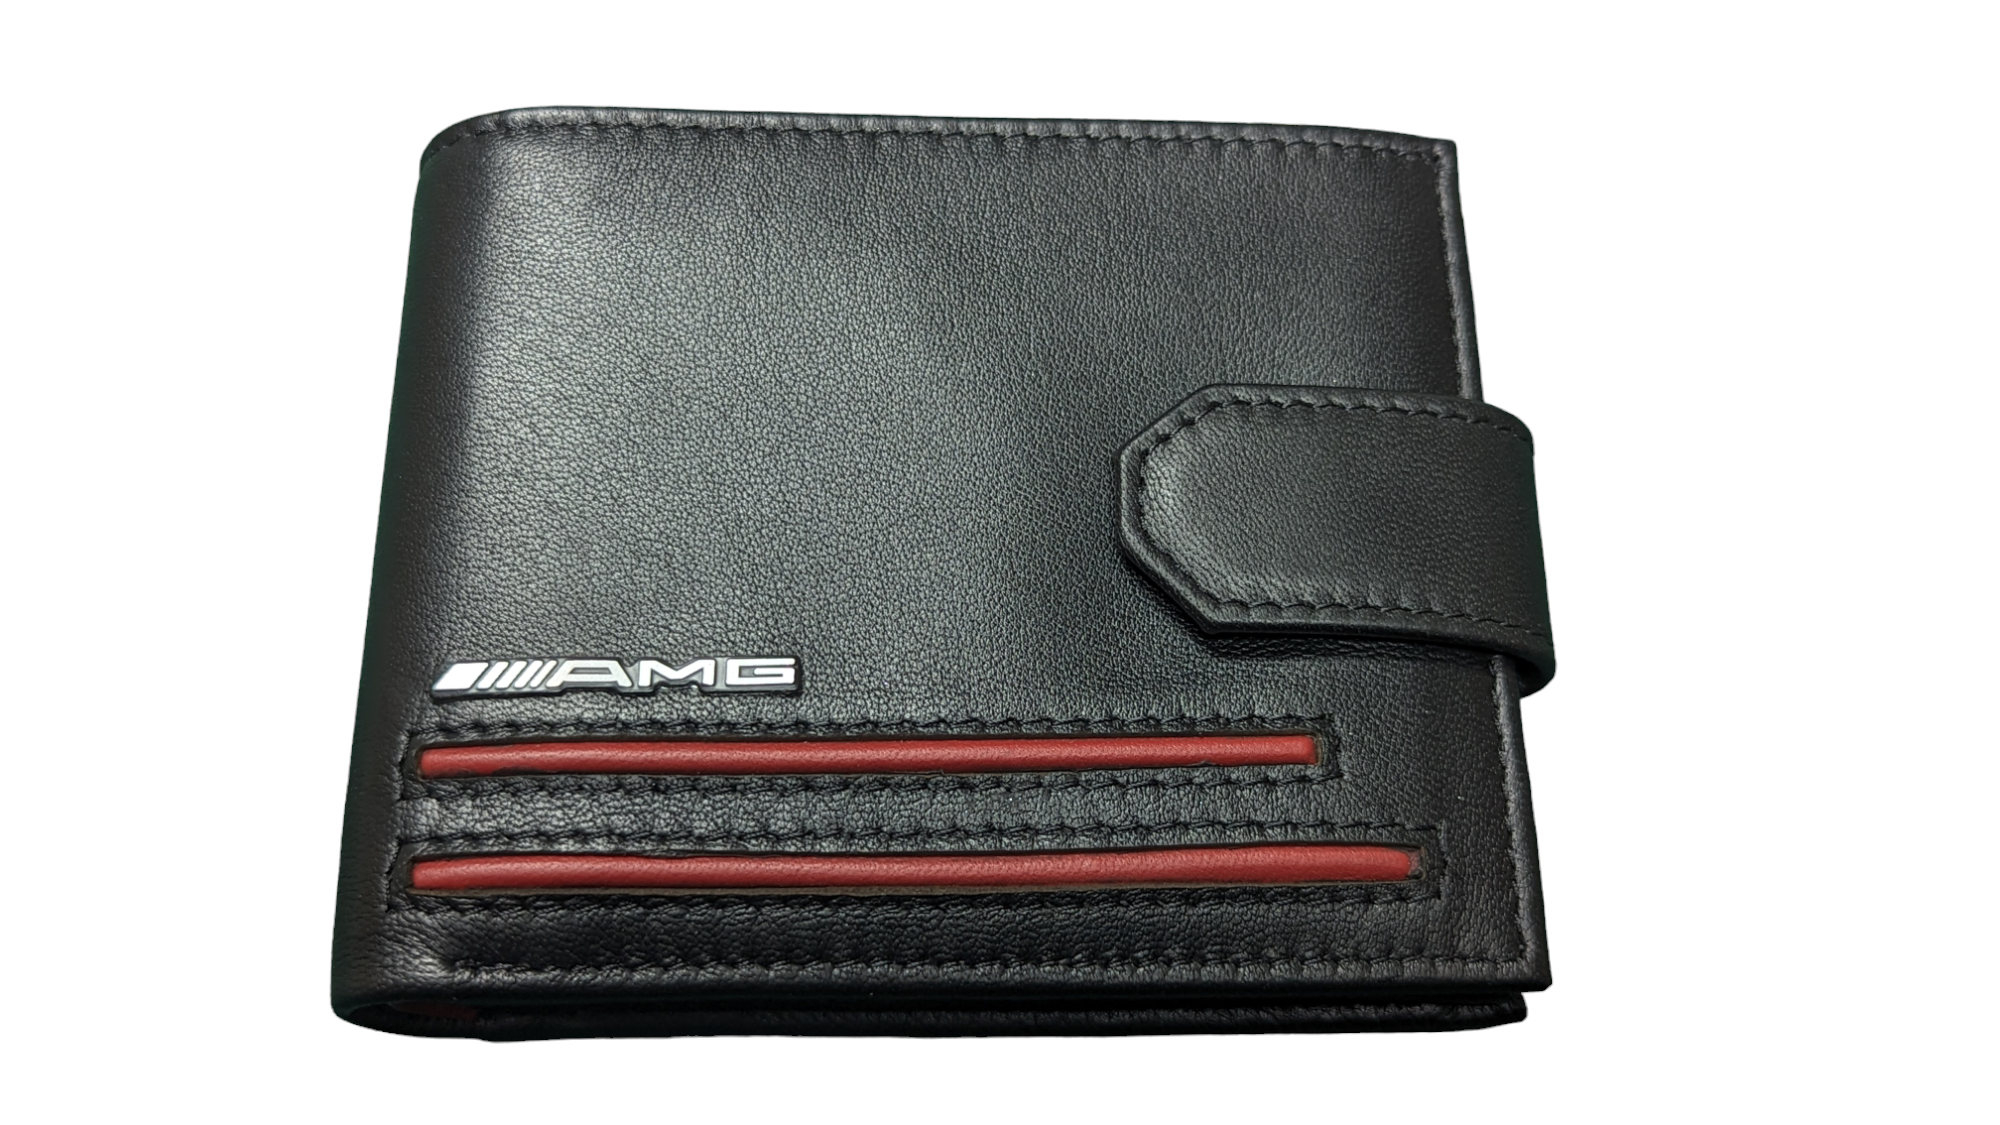 Black Red Elite Genuine Leather, Mercedes AMG Wallet with Rfid Blocker Gift Boxed